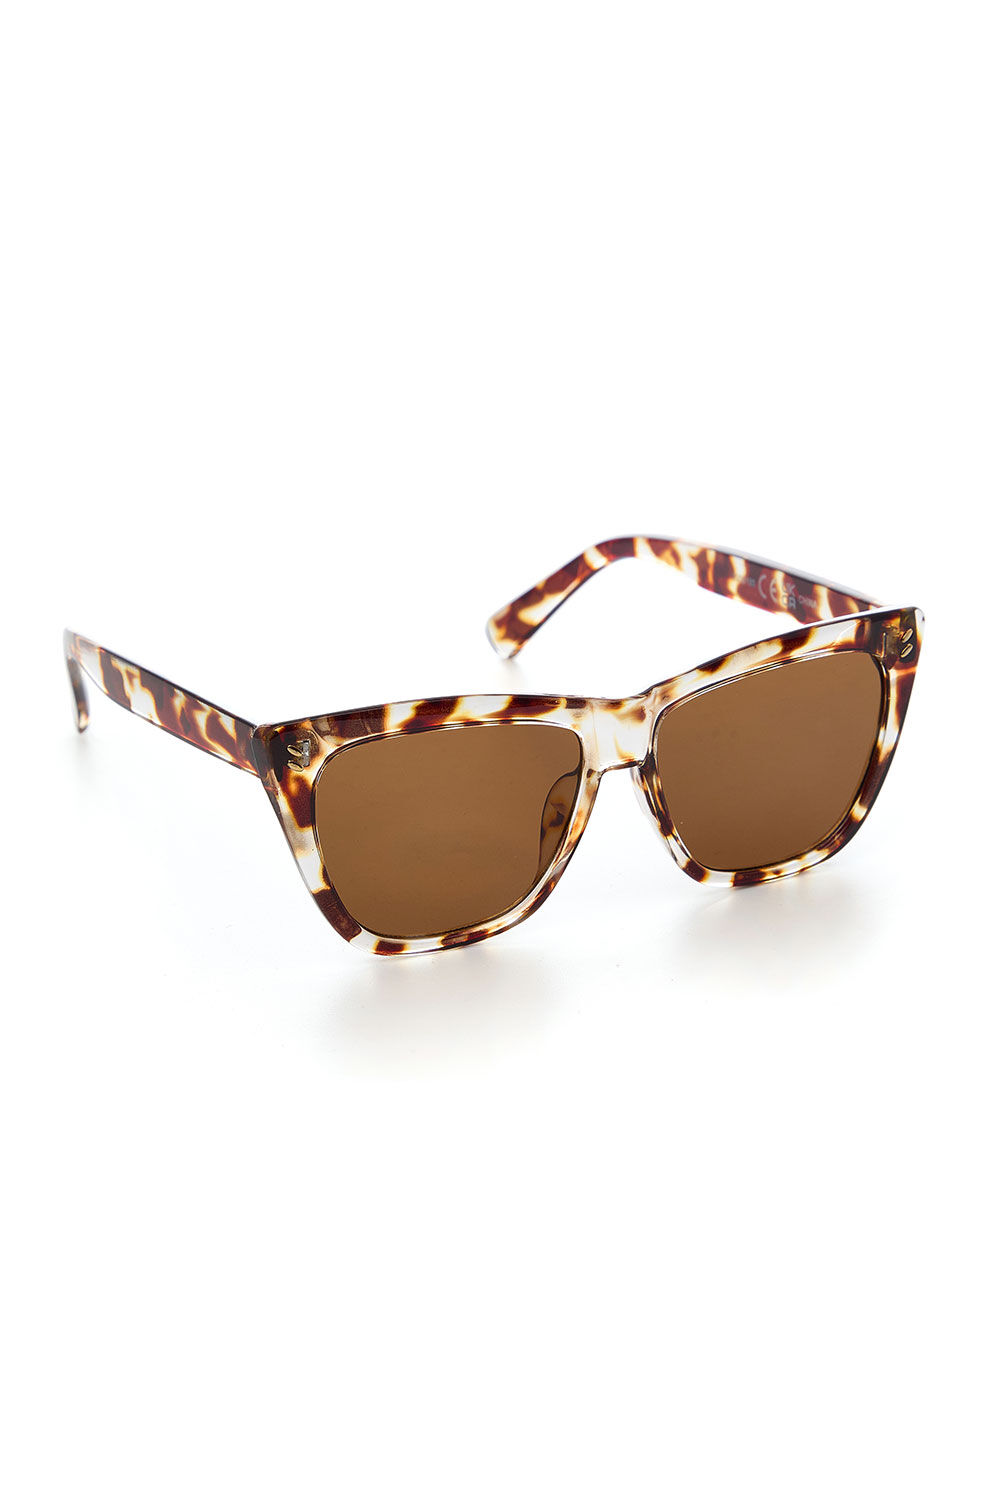 Bonmarche Brown Tortoiseshell Square Frame Sunglasses, Size: One Size - Summer Dresses